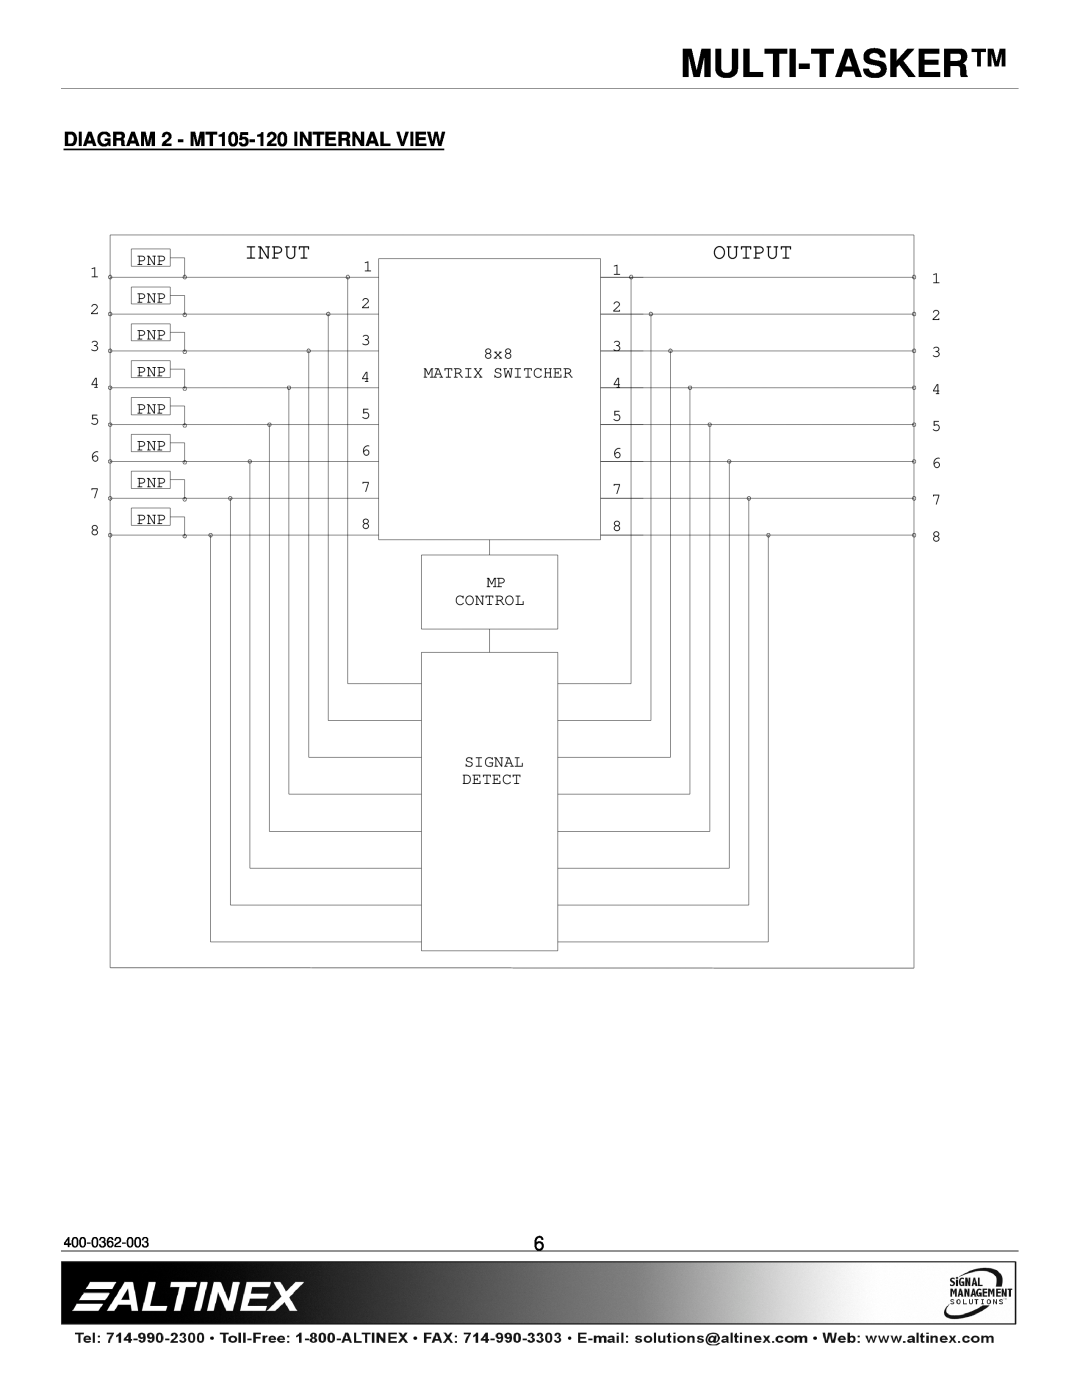 Altinex MT105-120/121 manual Input, Output, DIAGRAM 2 - MT105-120 INTERNAL VIEW, Multi-Tasker 